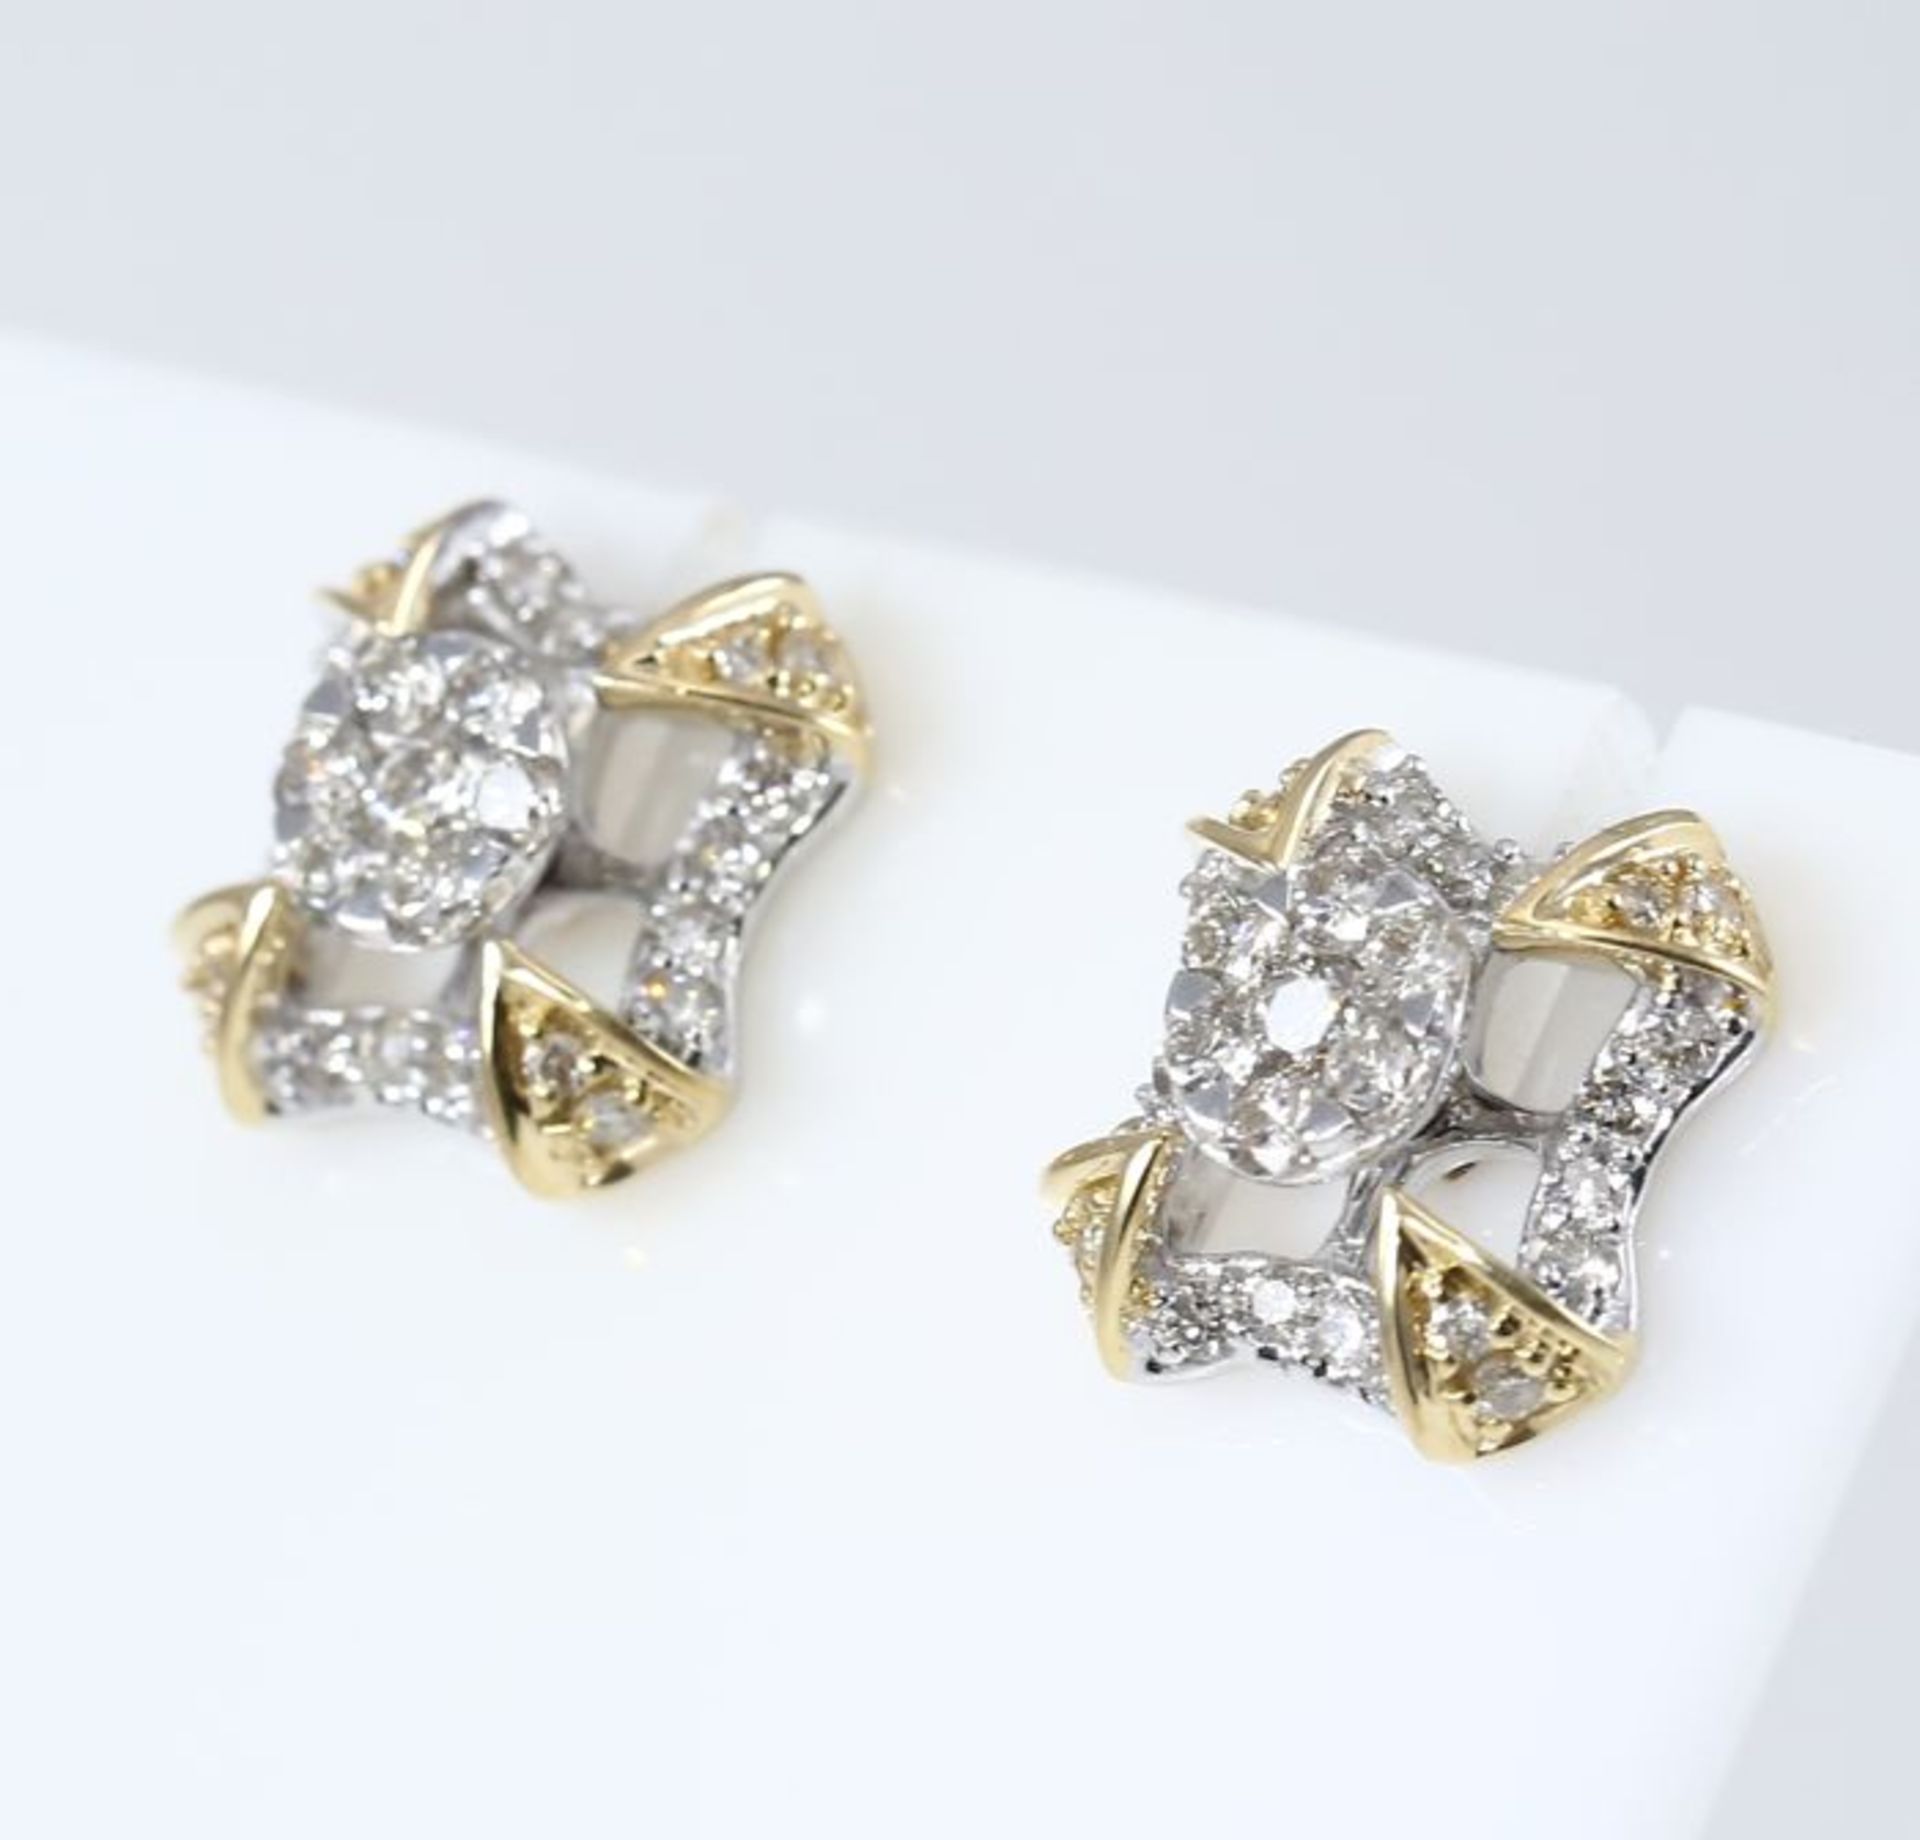 IGI Certified 18 K /750 Yellow Gold and Diamond Earrings - Image 7 of 8